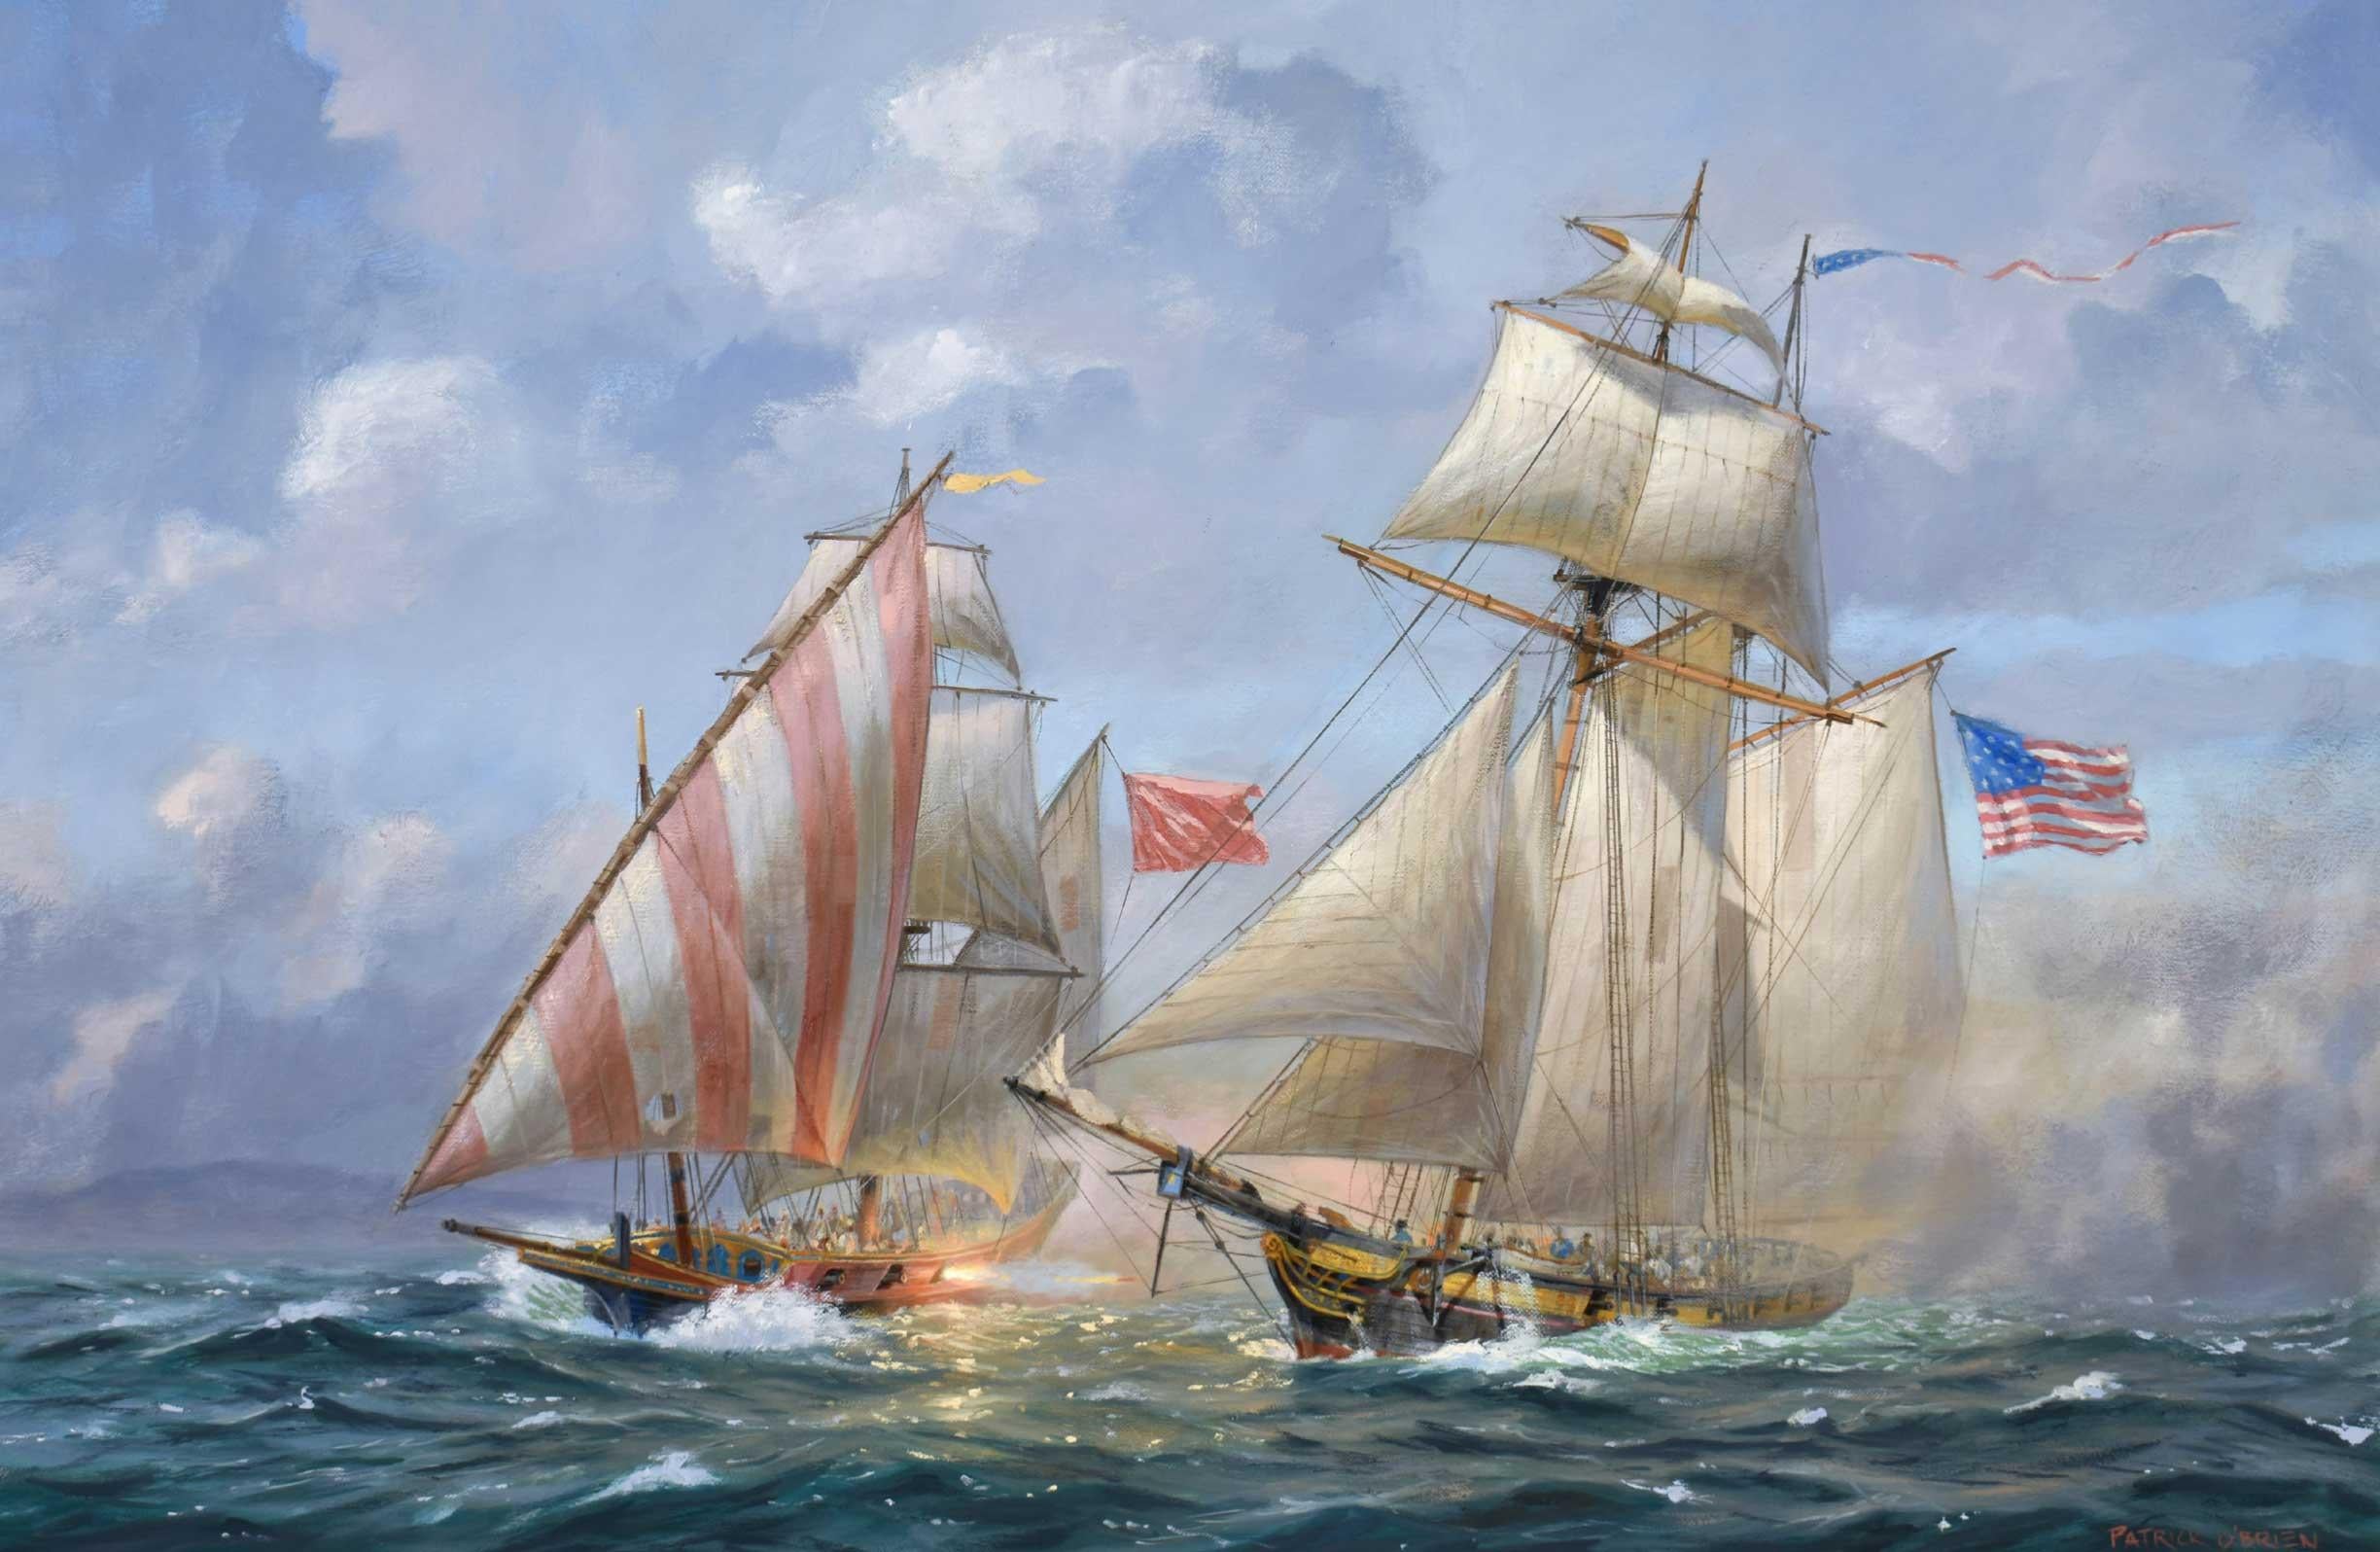 Patrick O'Brien Landscape Painting - USS Enterprise Battling the Barbary Pirates, 1801 